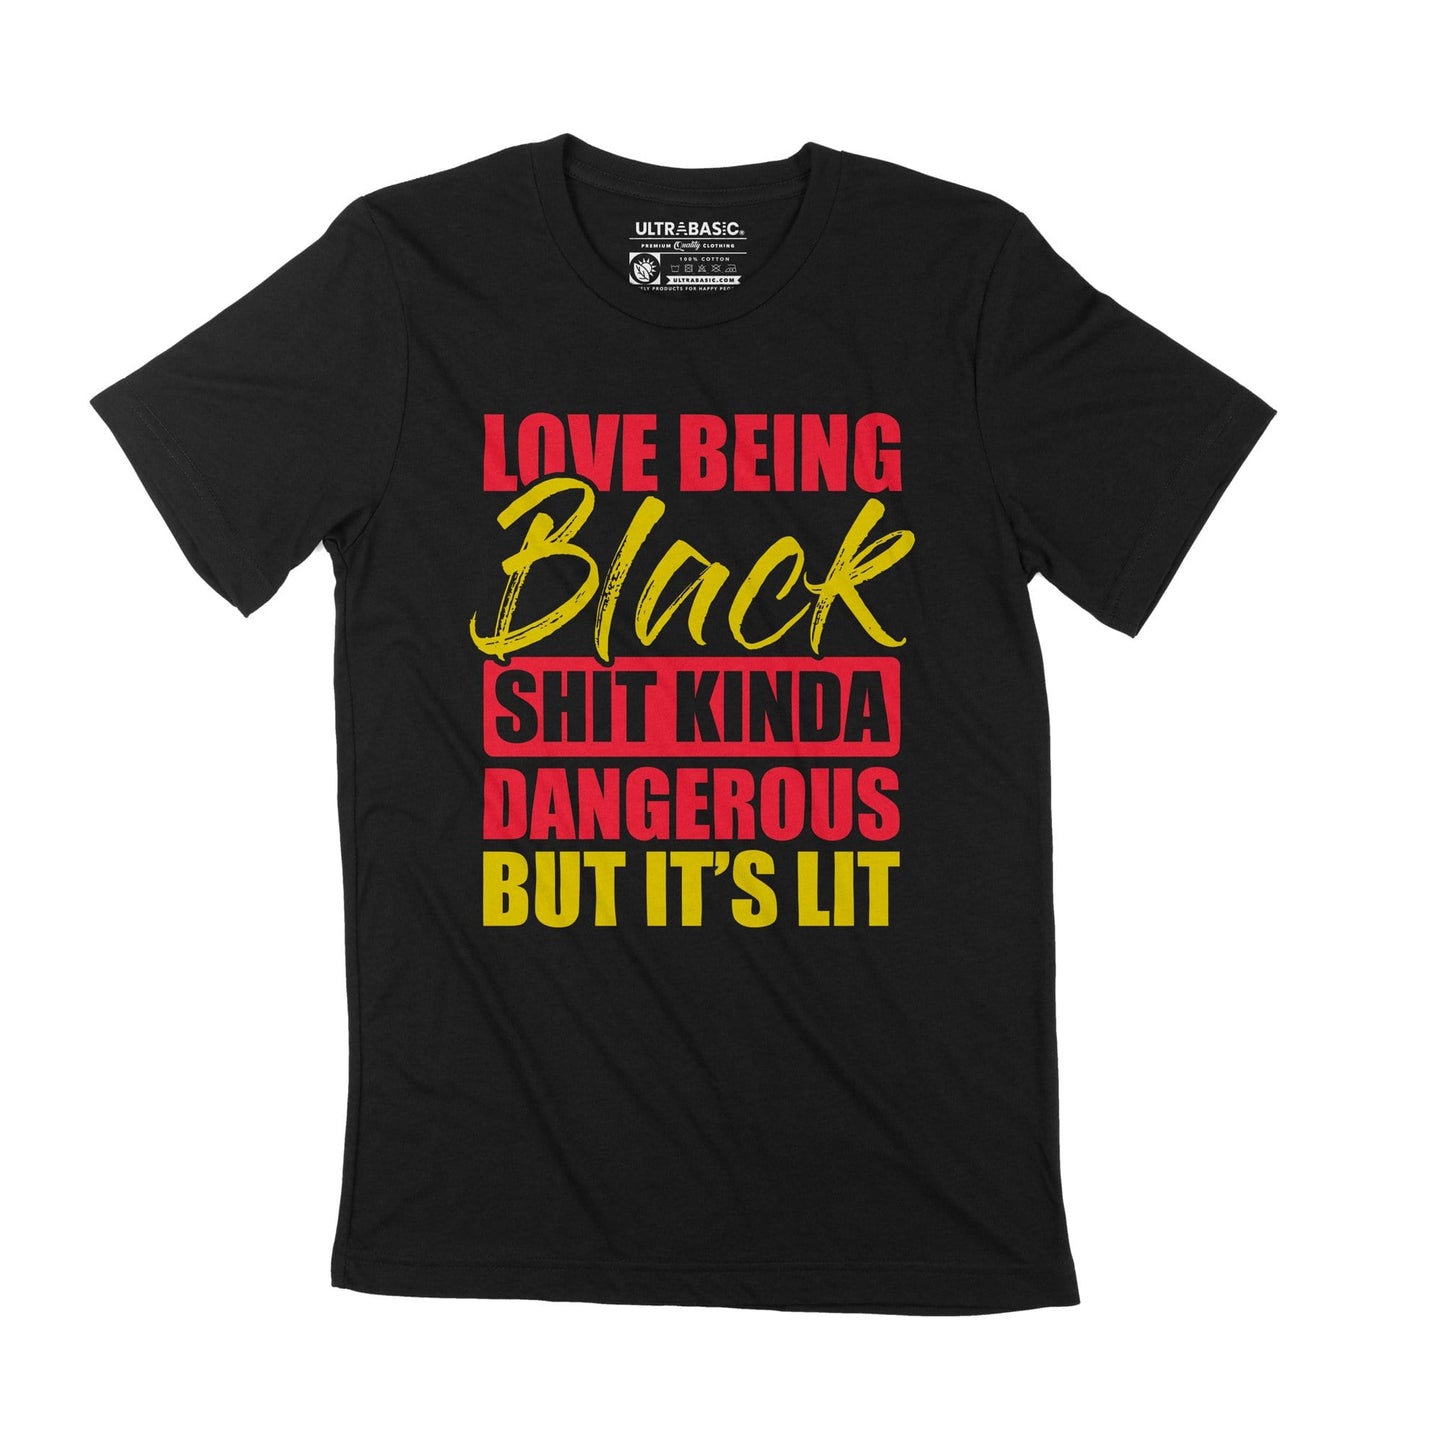 Unisex Adult T-Shirt Love Being Black BLM Black Lives Matter Shirt